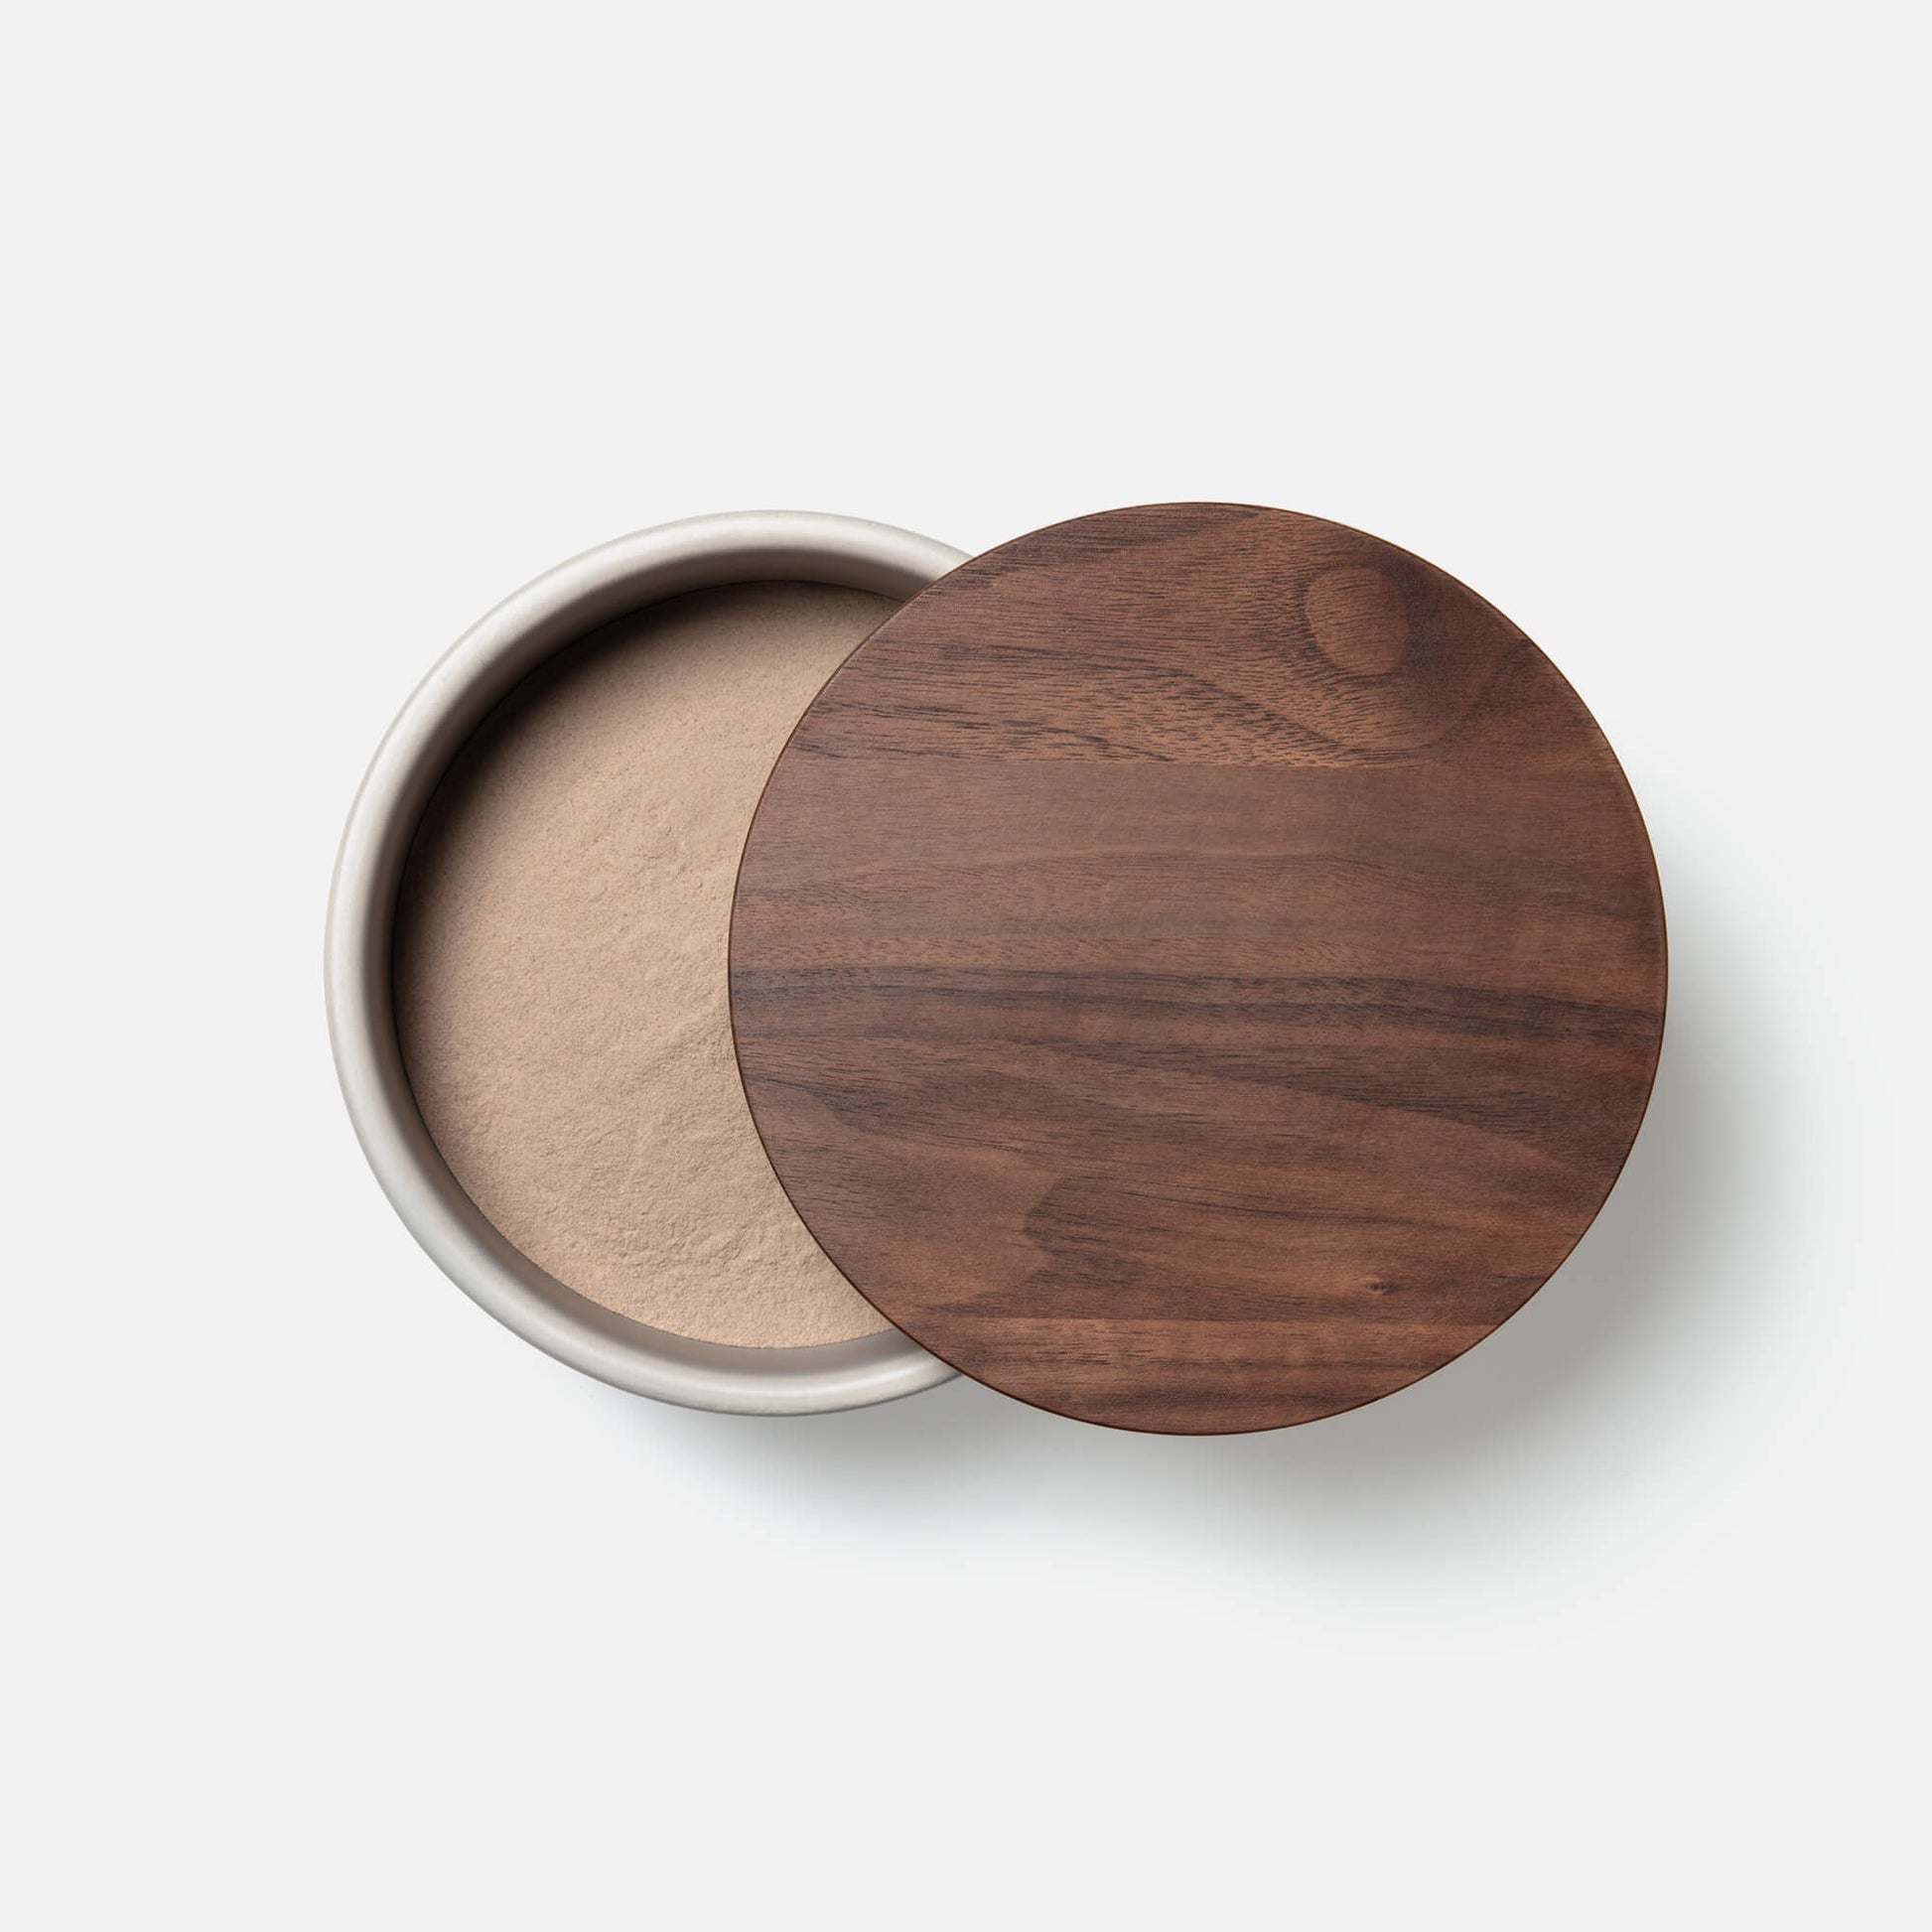 Less Ceramic Bowl Container Designed by Vincent Van Duysen